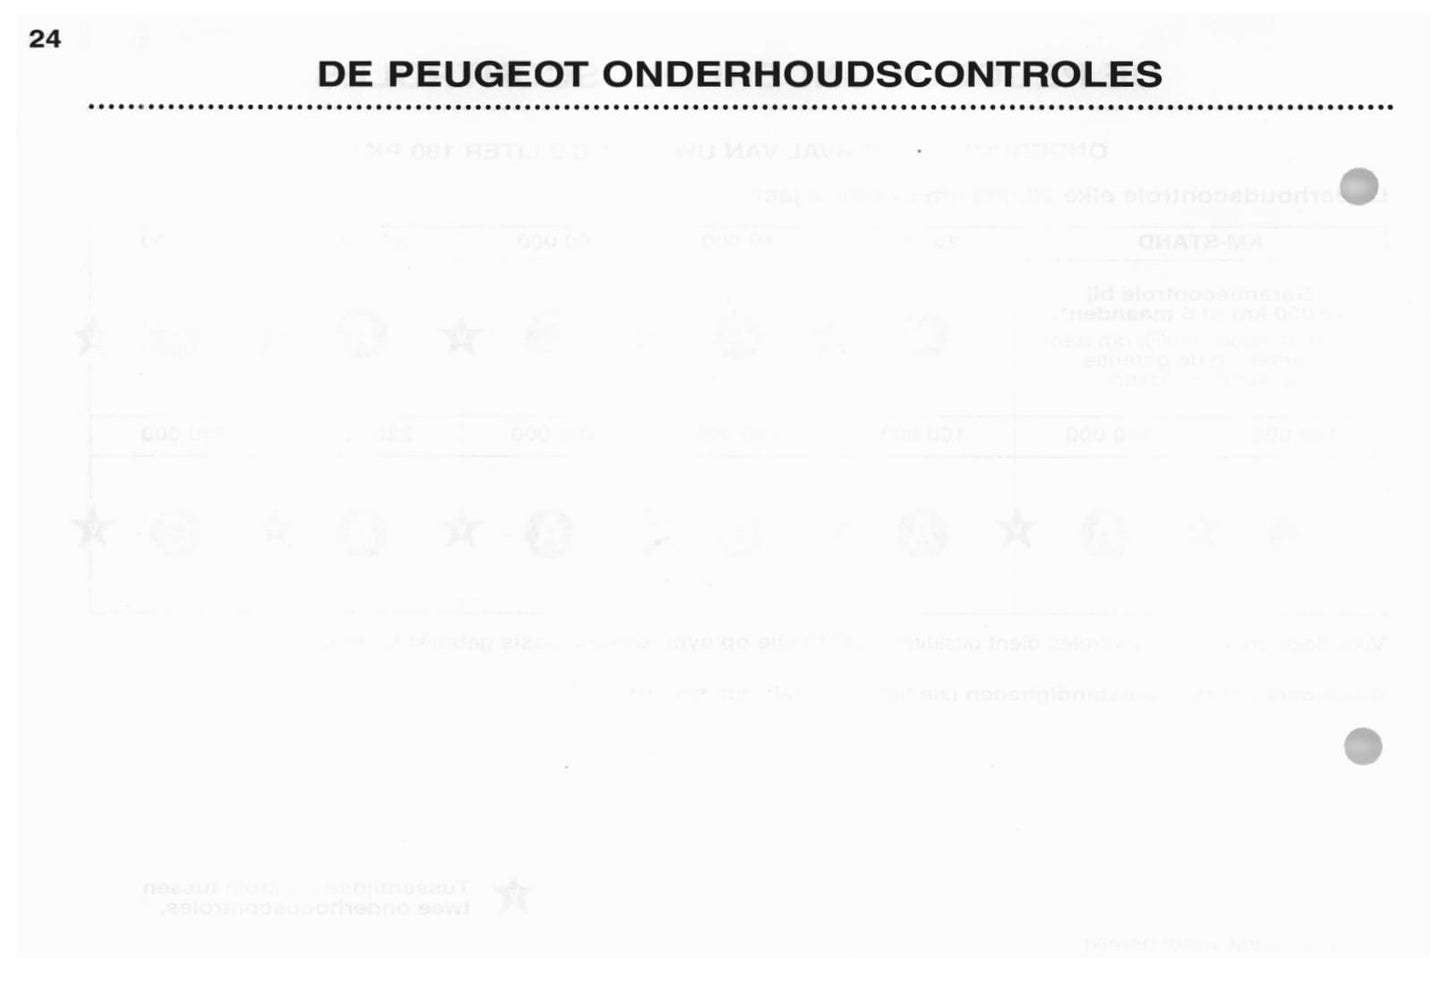 2003 Peugeot 307 CC Owner's Manual | Dutch